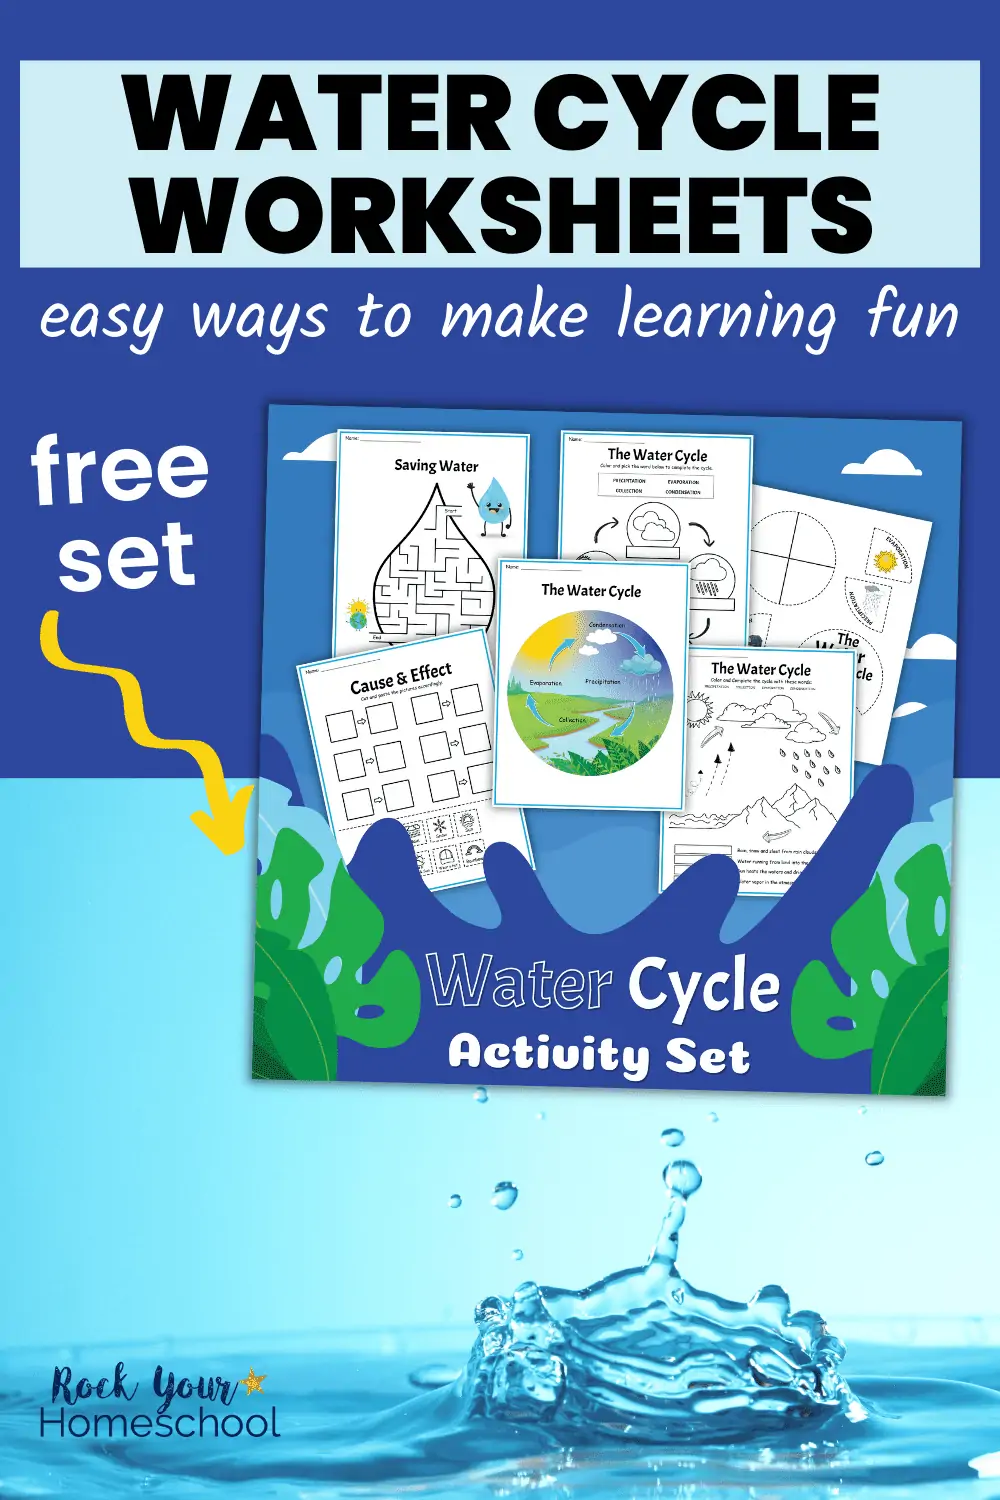 Water Cycle Worksheets: Free Printable Pack of Science Fun Activities for Kids